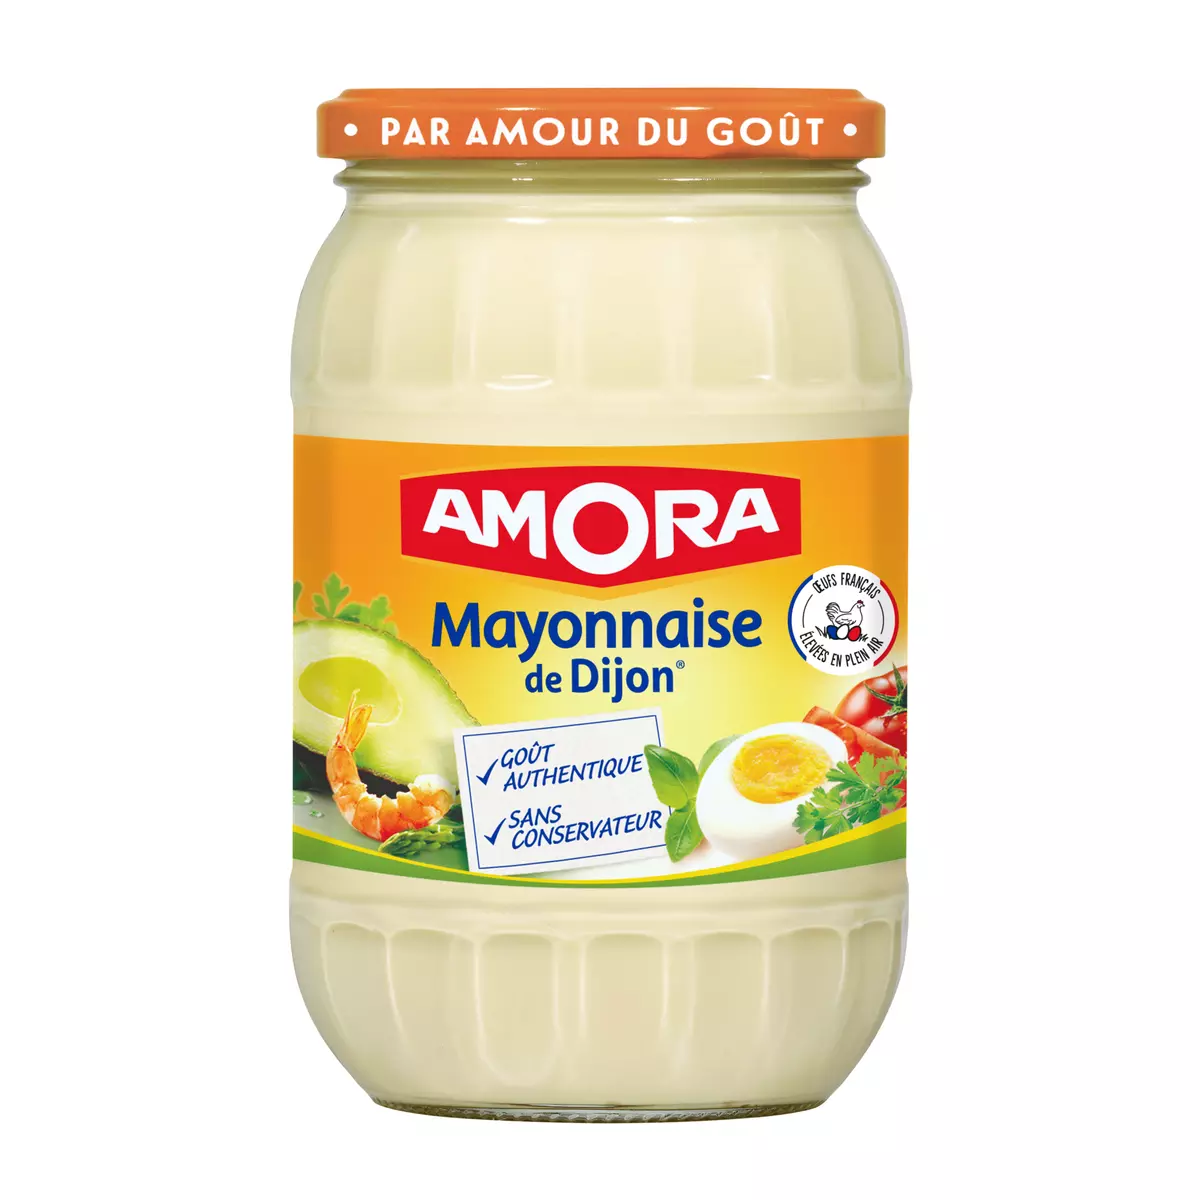 AMORA Mayonnaise de Dijon sans conservateur en bocal 725g